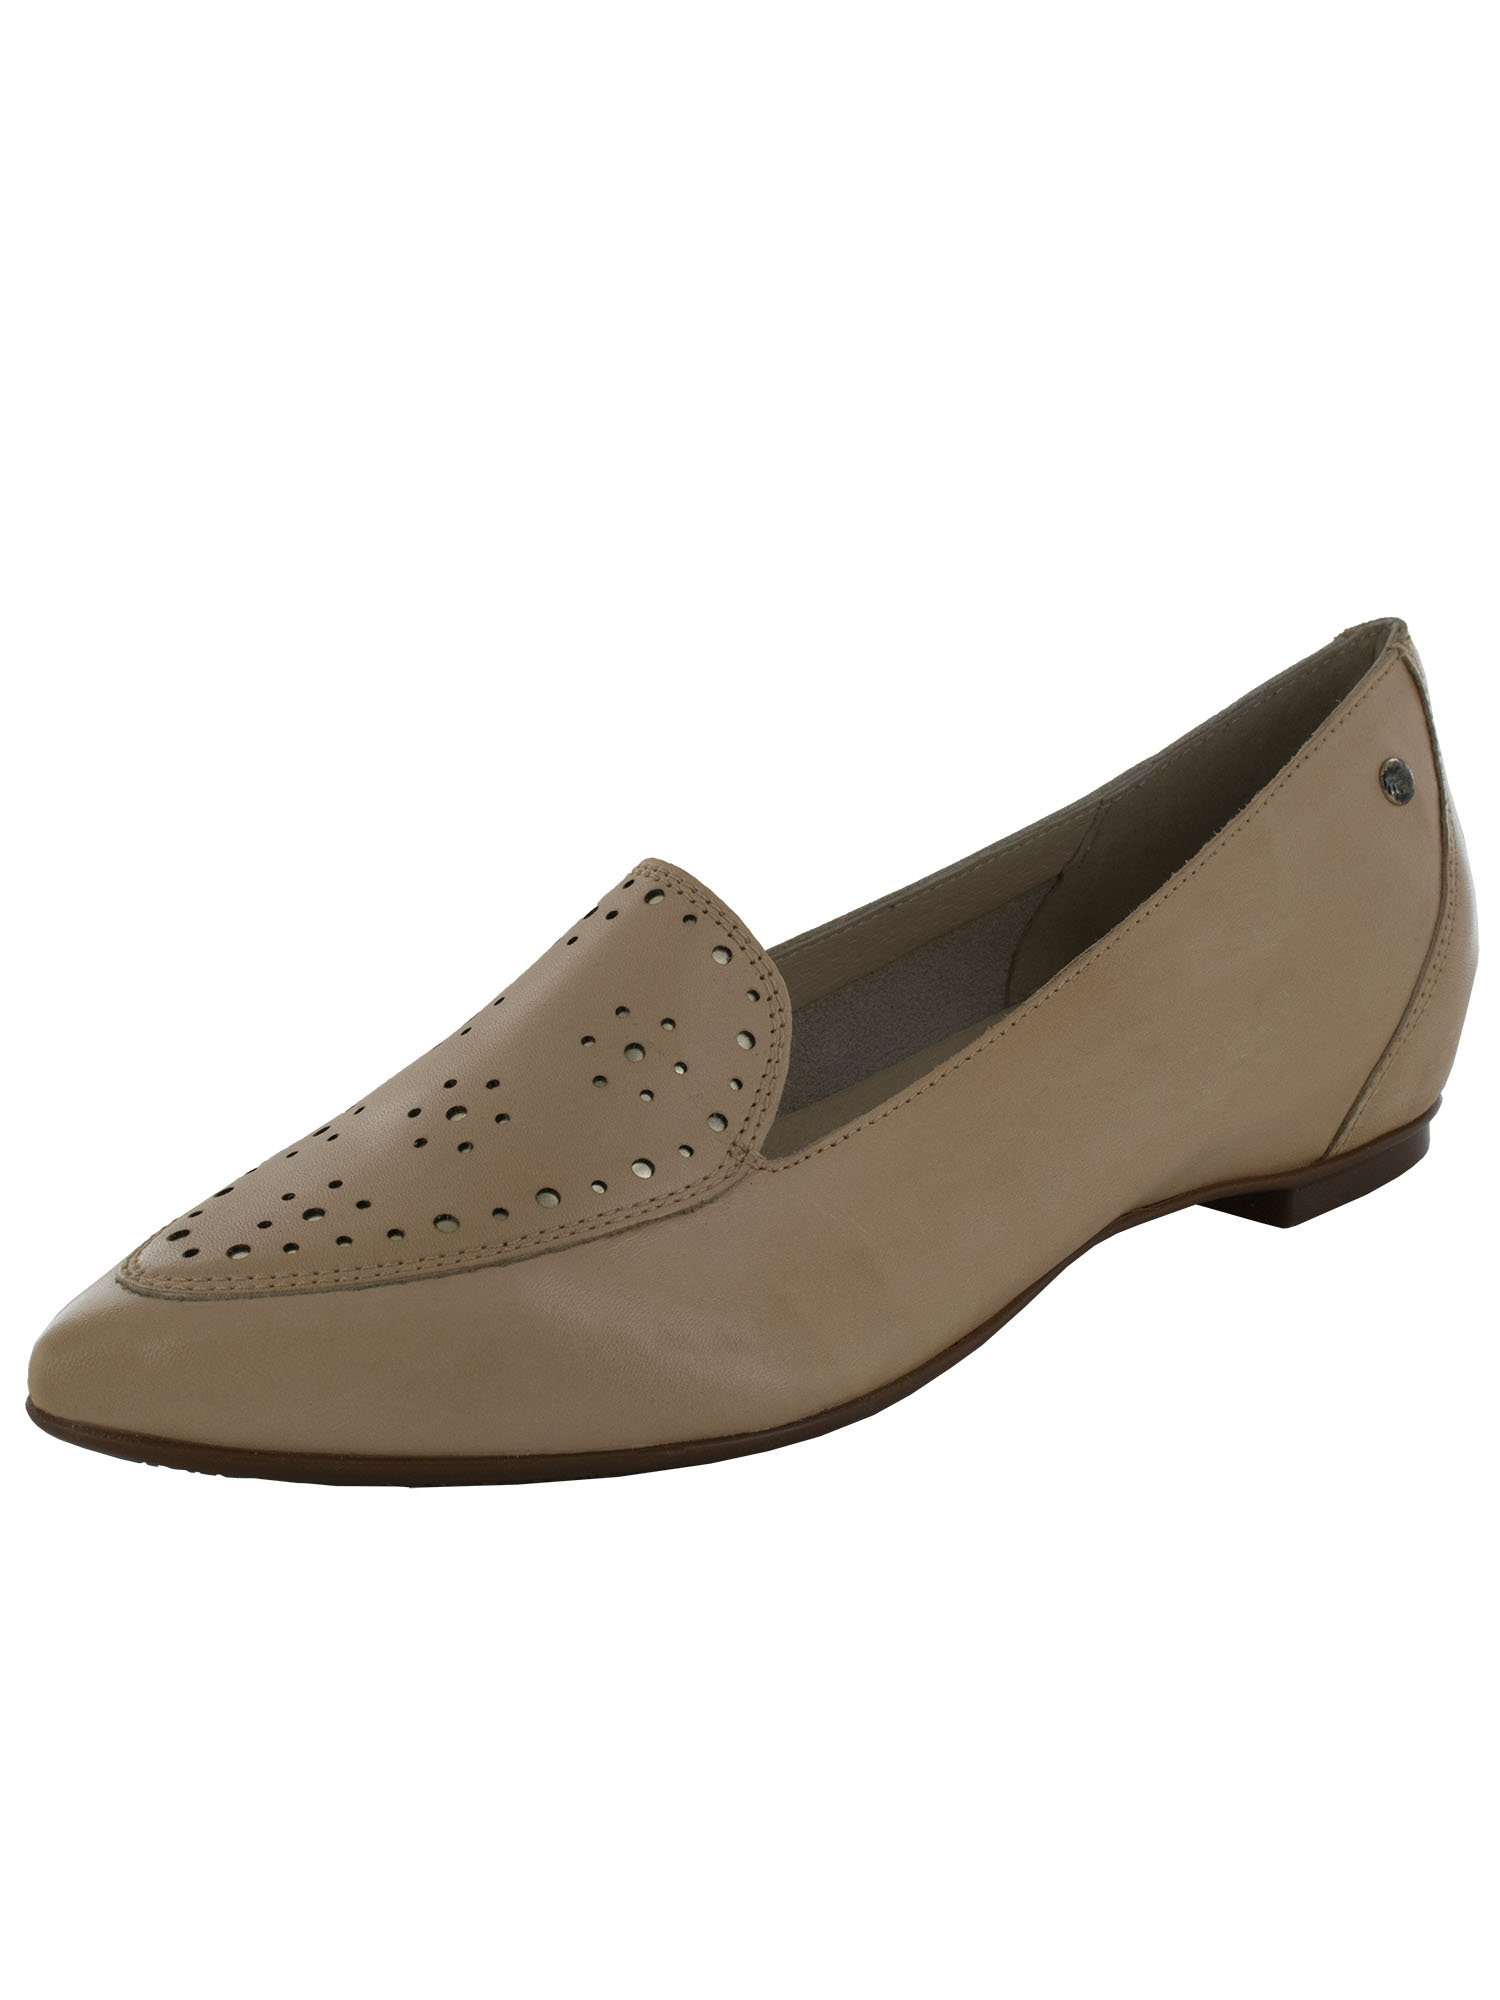 Pikolinos Womens La Marina W5L-4876 Loafer Shoes, Bamboo, 35 M EU / 4.5-5 M US - image 1 of 3